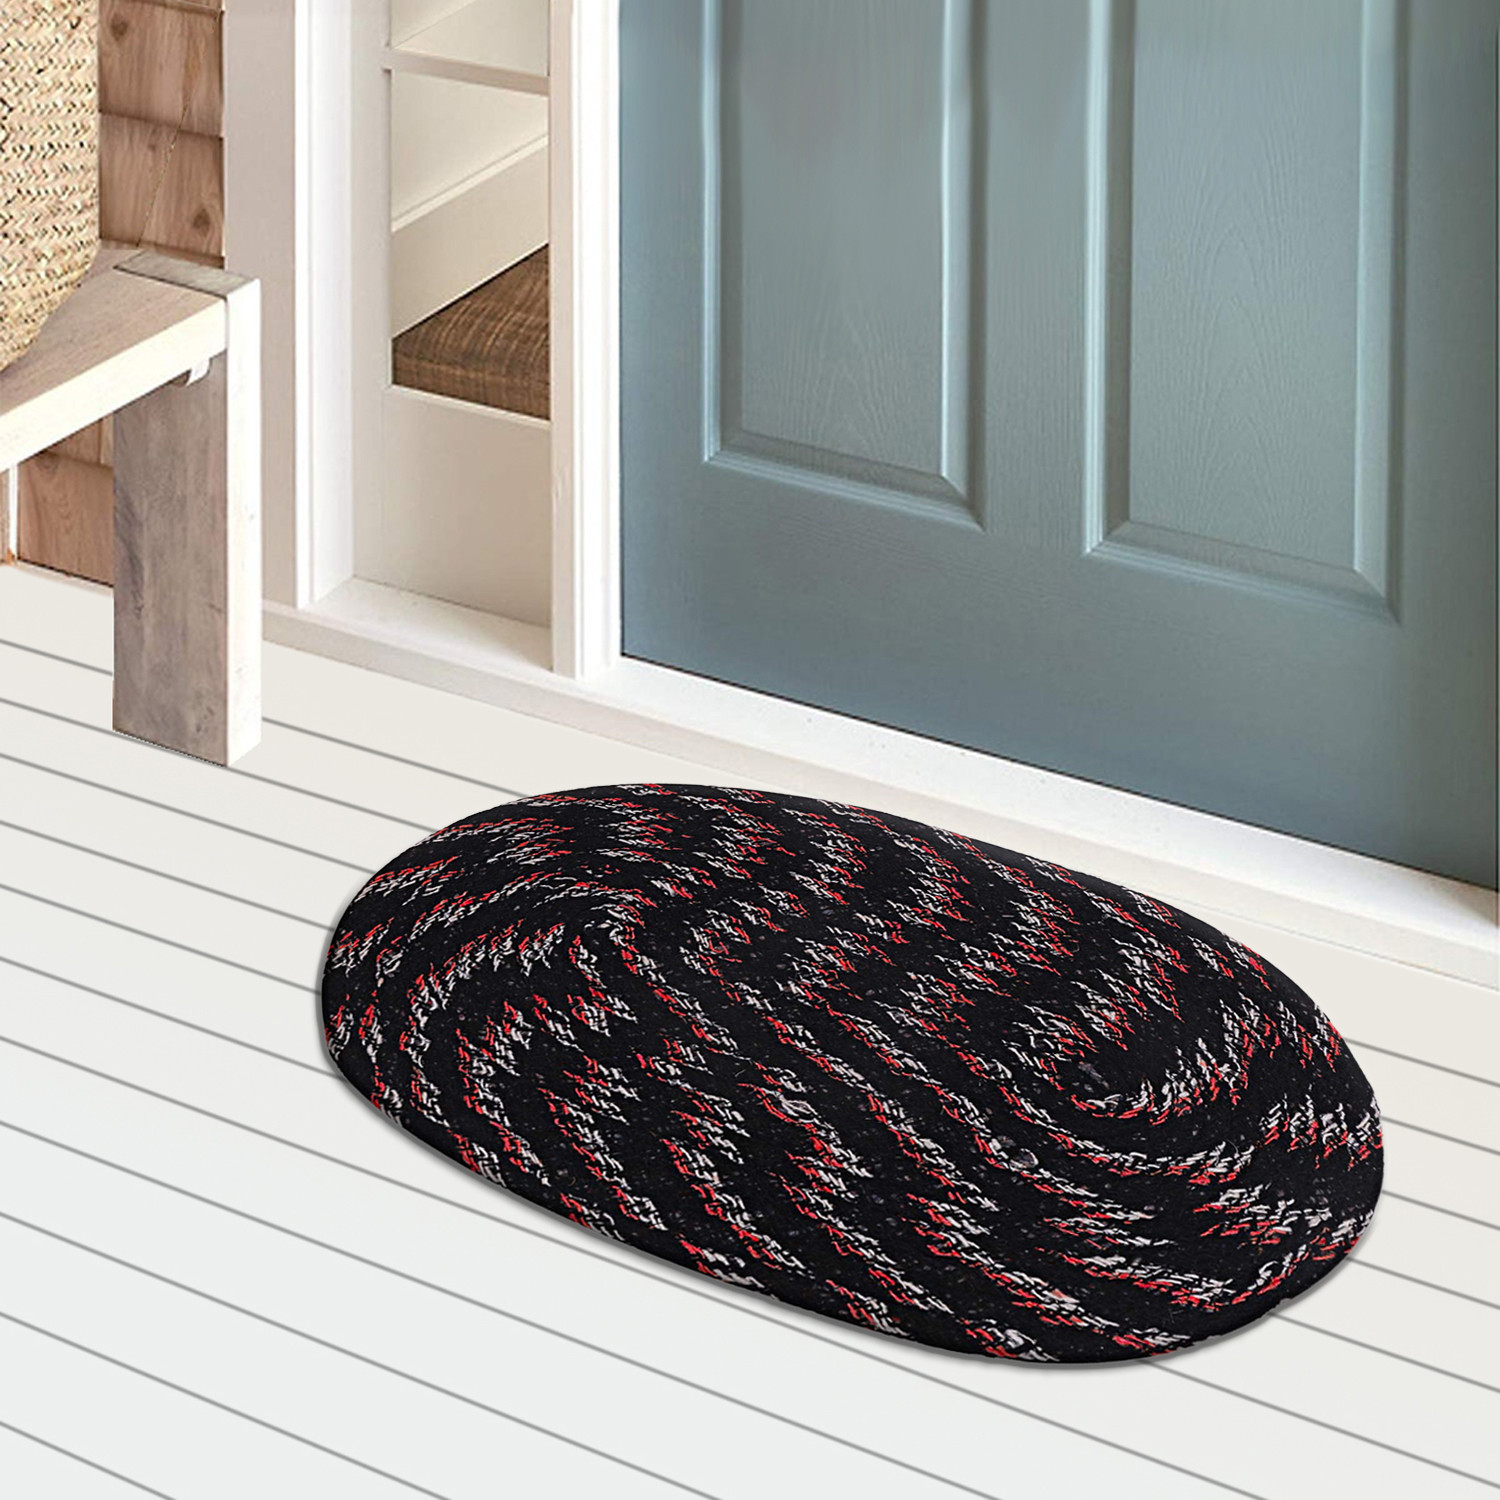 Kuber Industries Cotton Oval Door Mat For Porch/Kitchen/Bathroom/Laundry Room,(Black) 54KM3948